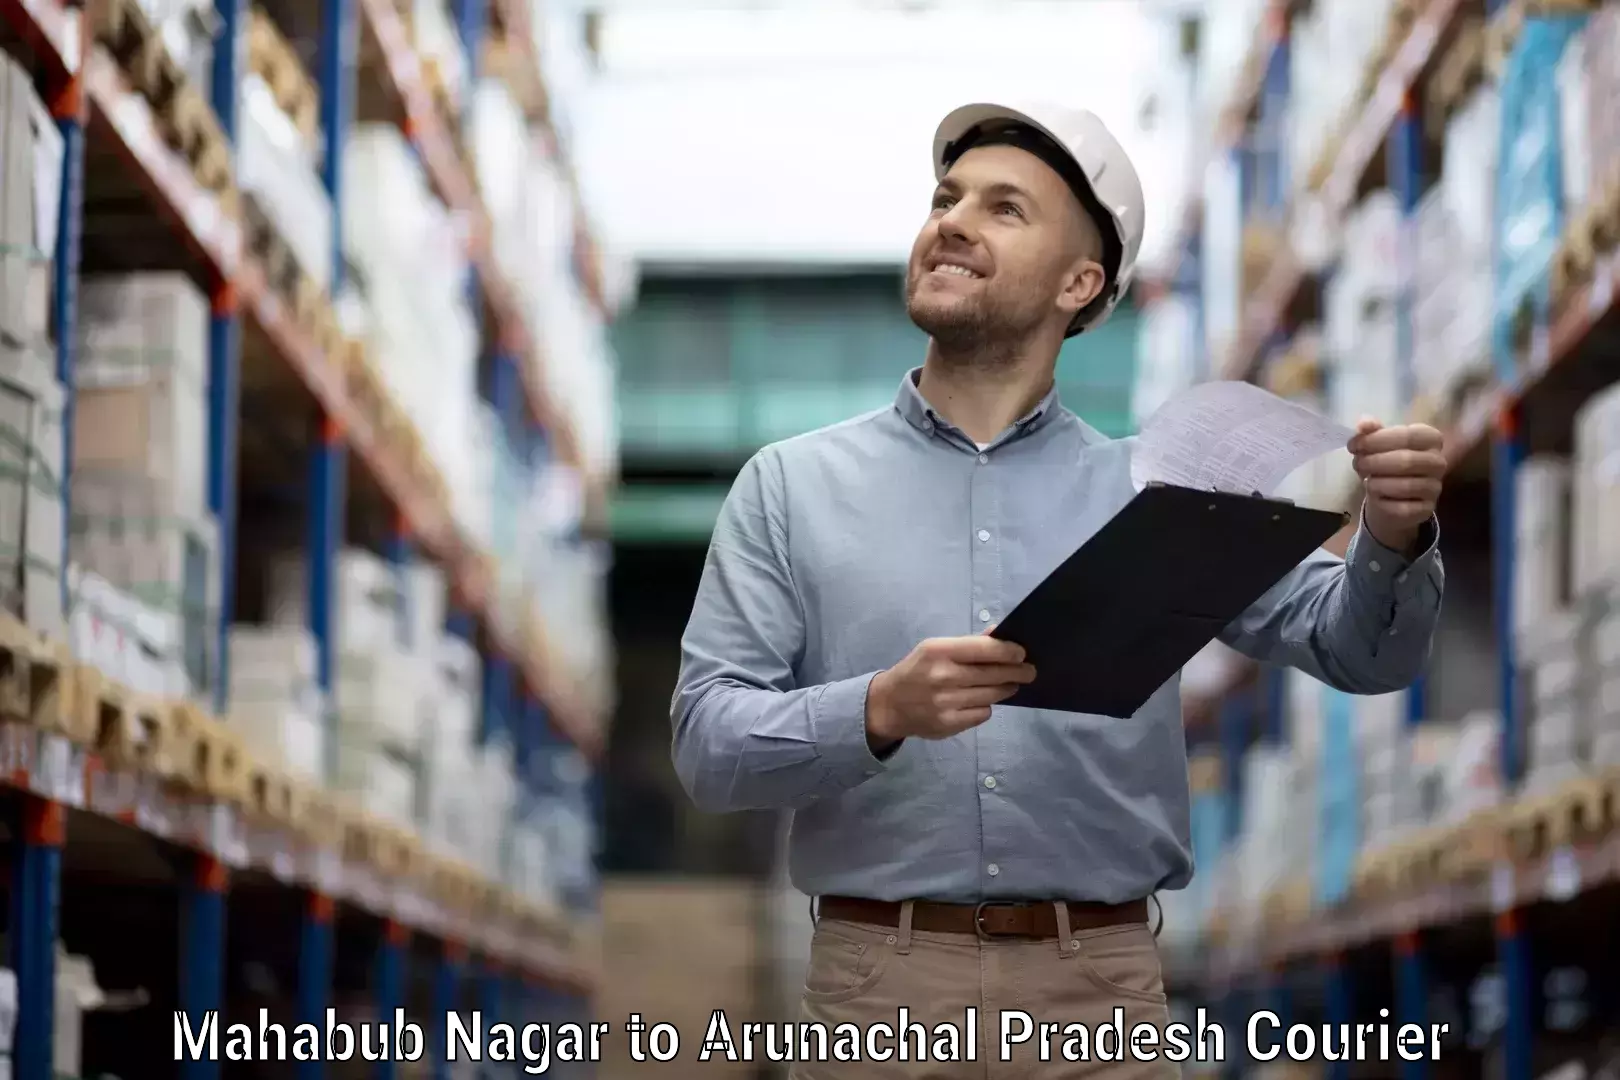 Professional courier handling Mahabub Nagar to Roing